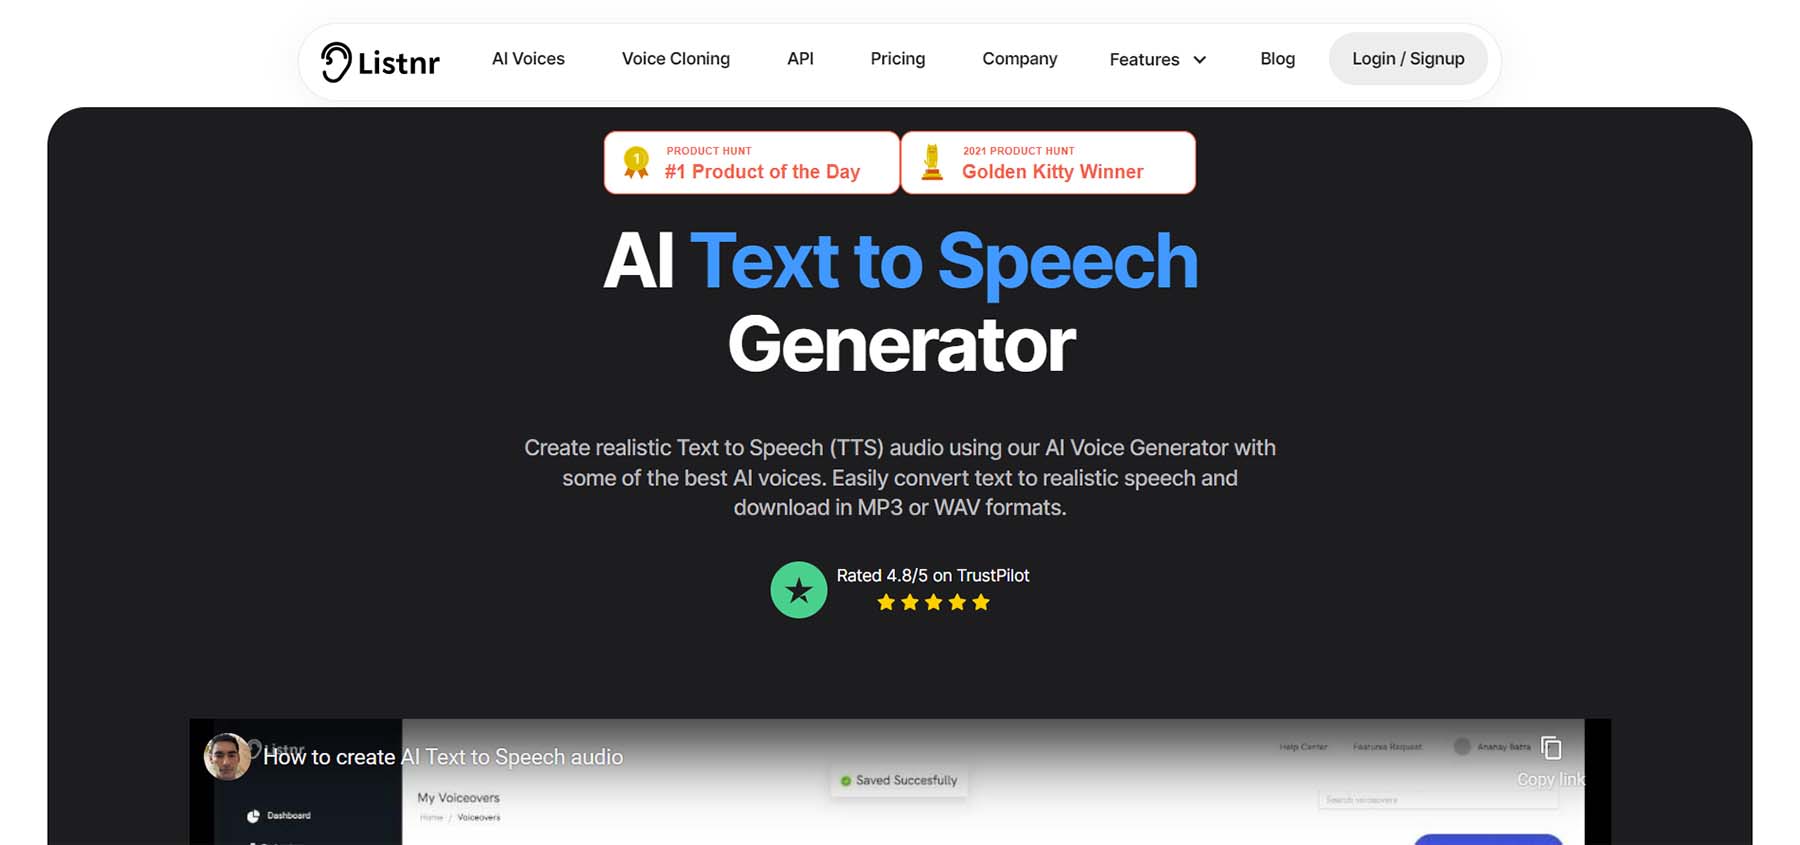 Listnr AI voice generator tool